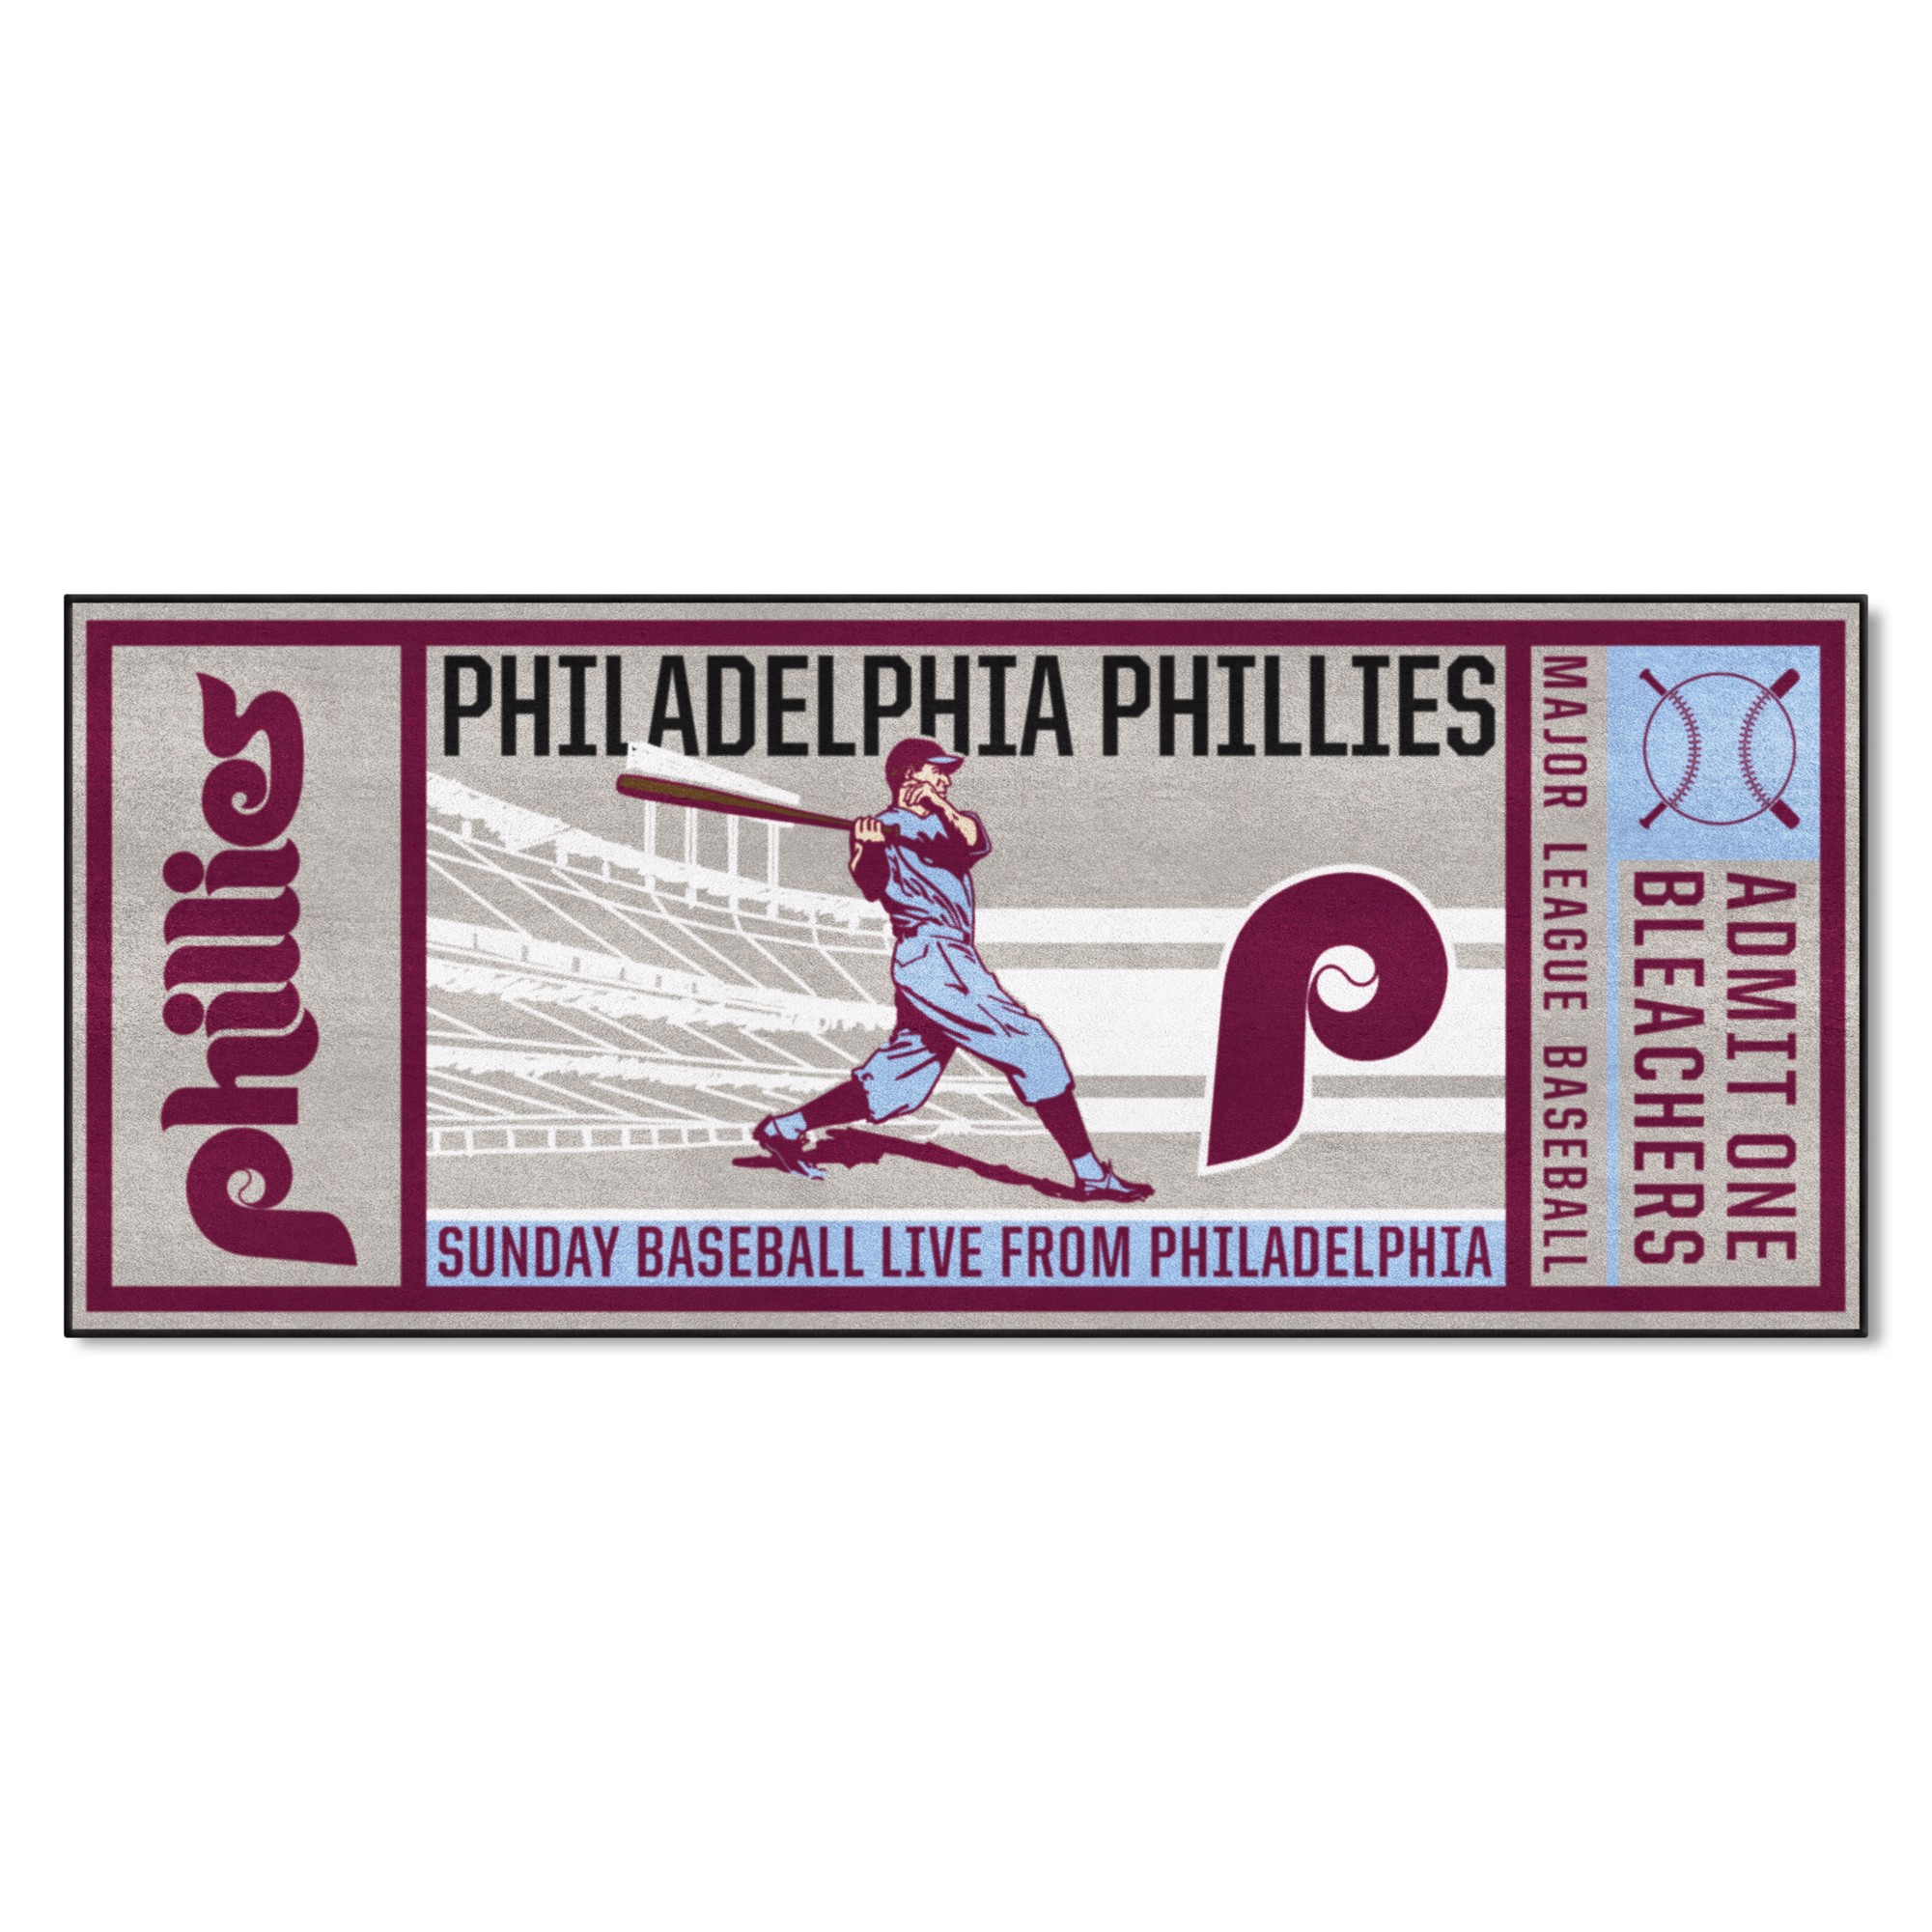 Philadelphia Phillies on X: Thursday blues